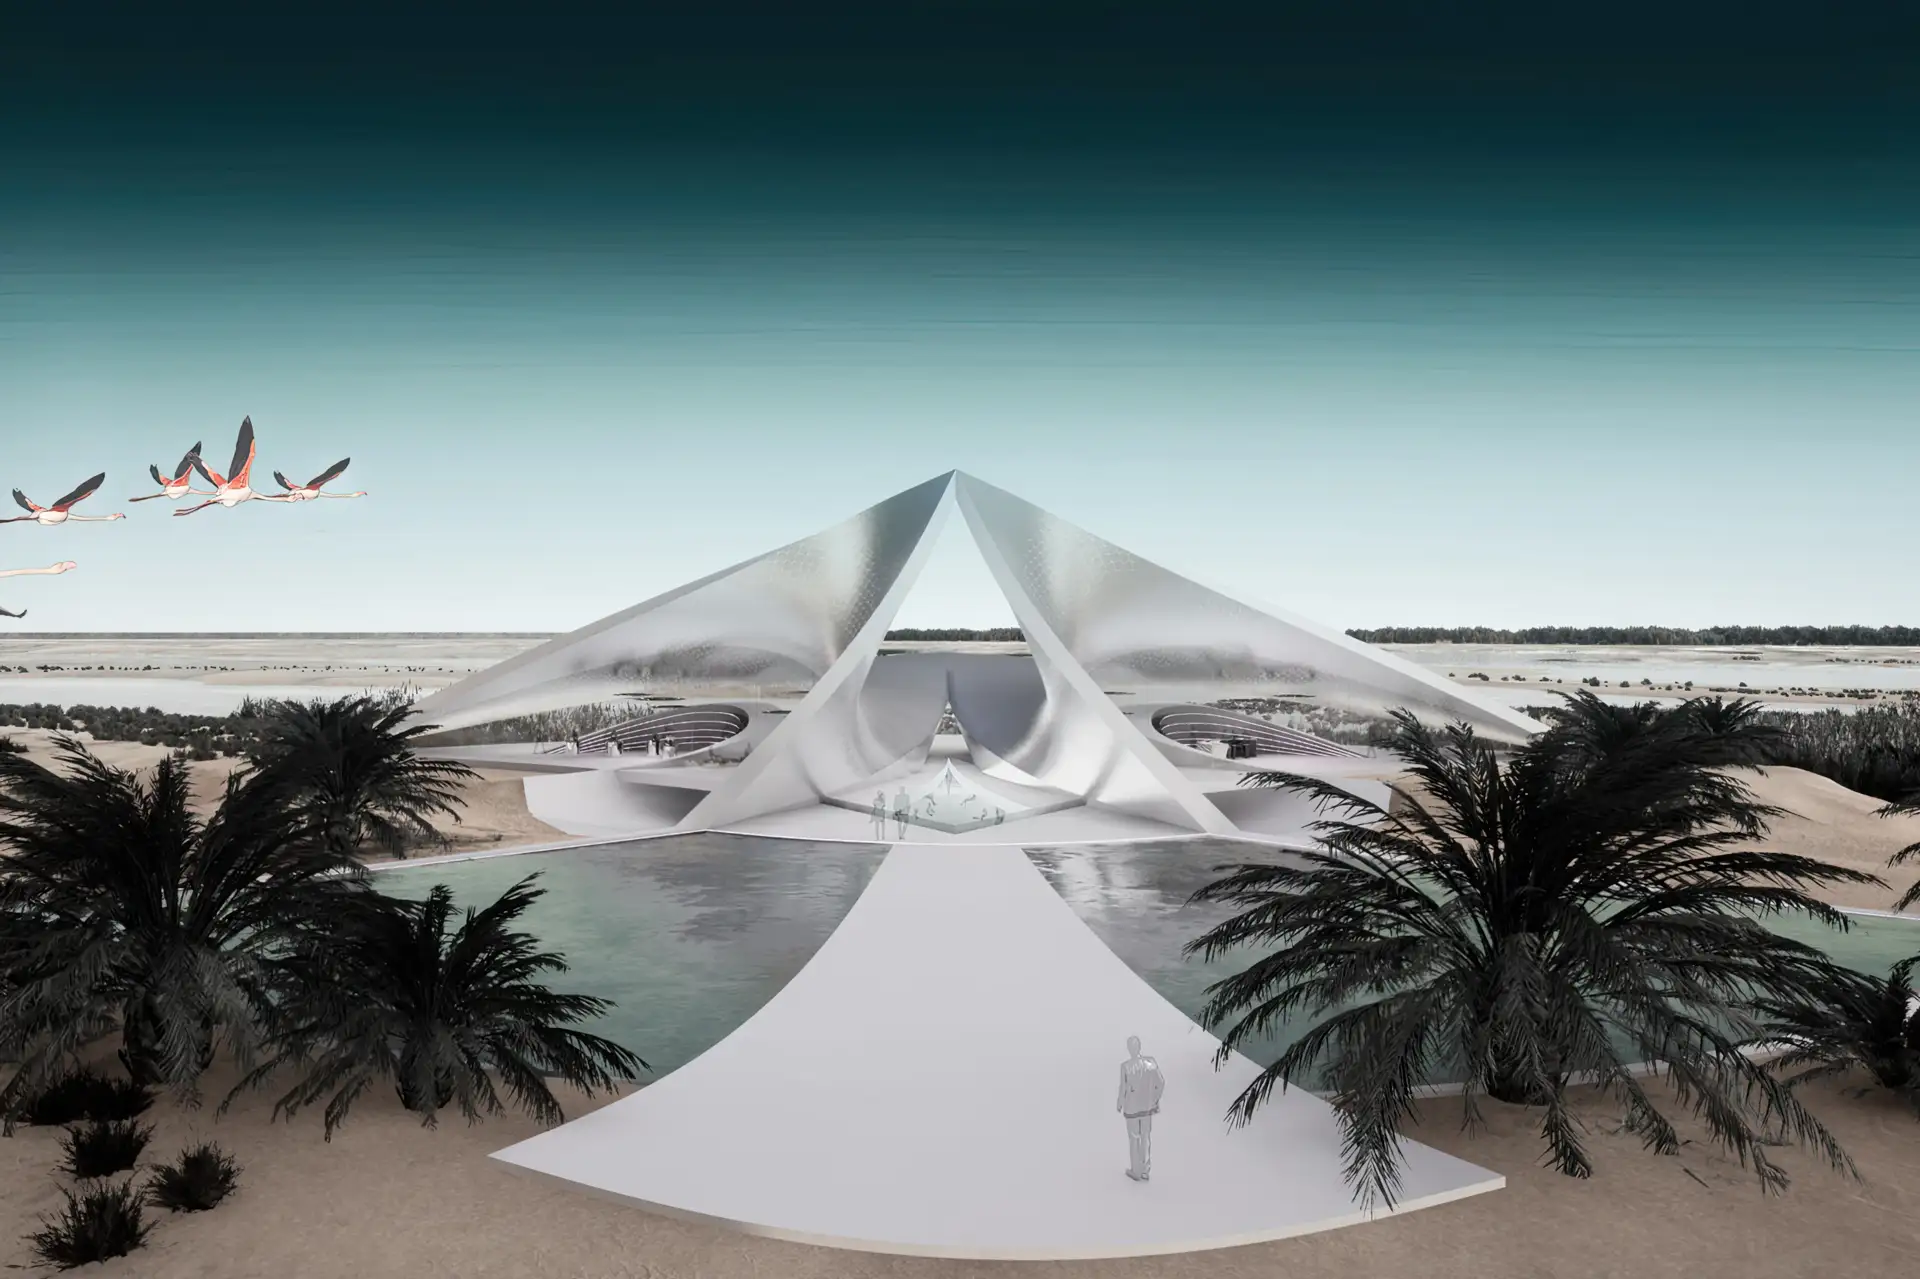 LEF3D_FERFERRO_Ferron Collette_Futuristic Architecture_2020_Flamingo Dream_Flamingo Center_6-gigapixel-art-width-1920px_webp